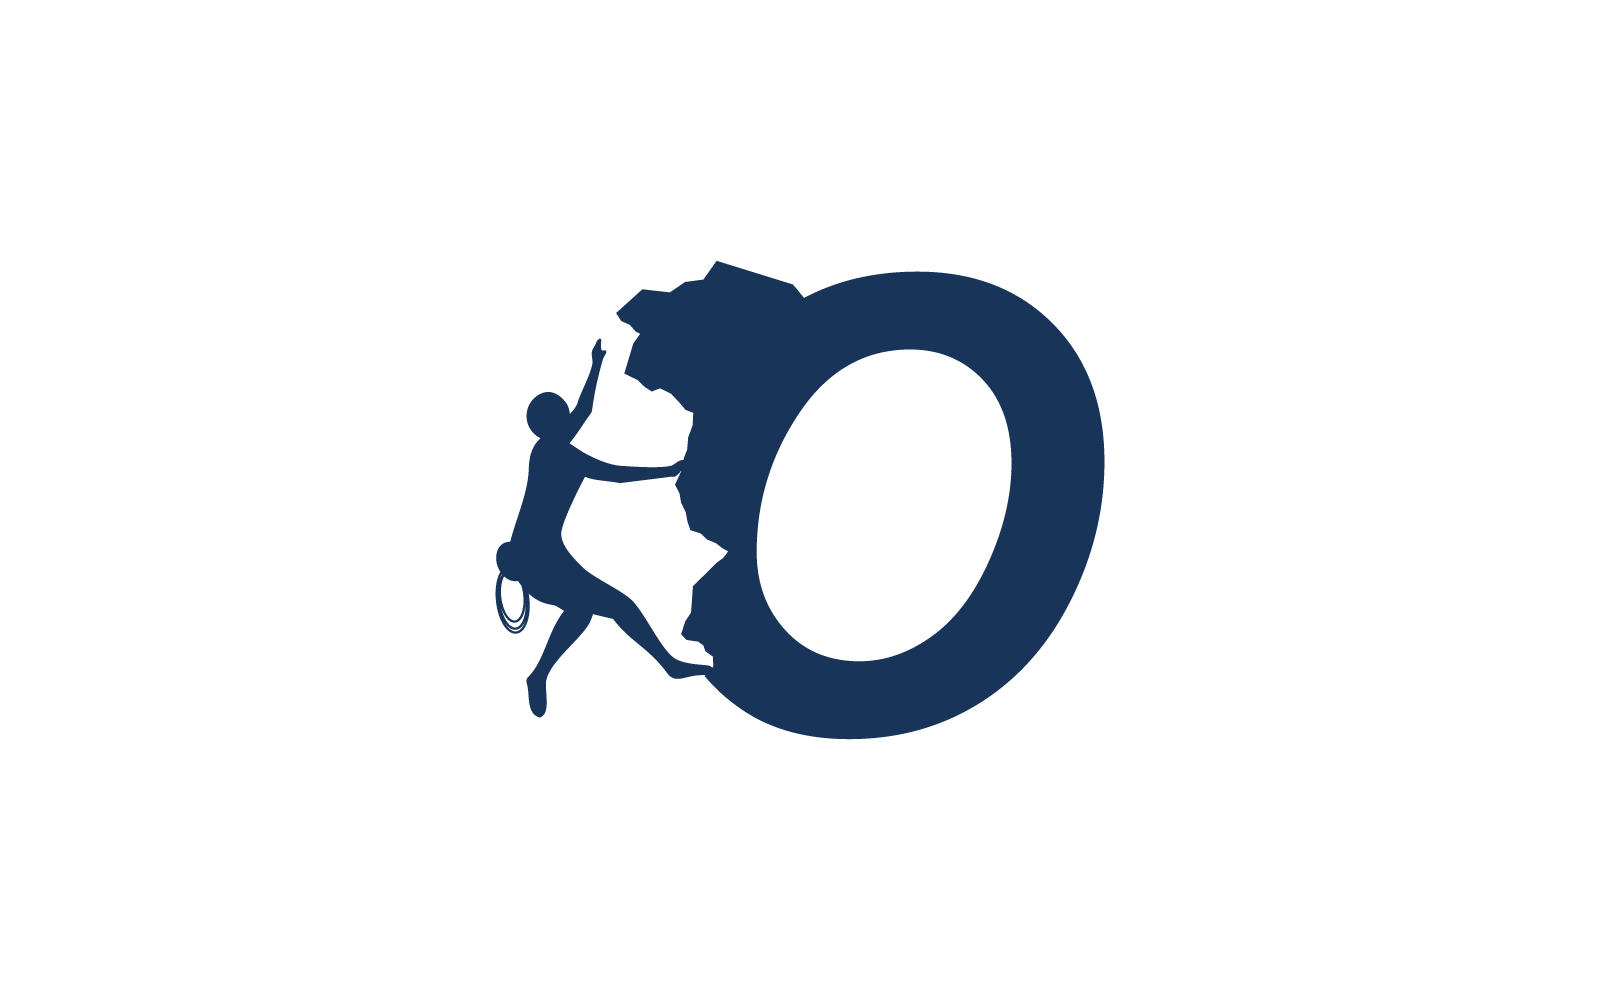 Rock climber logo with alphabet vector illustration flat design